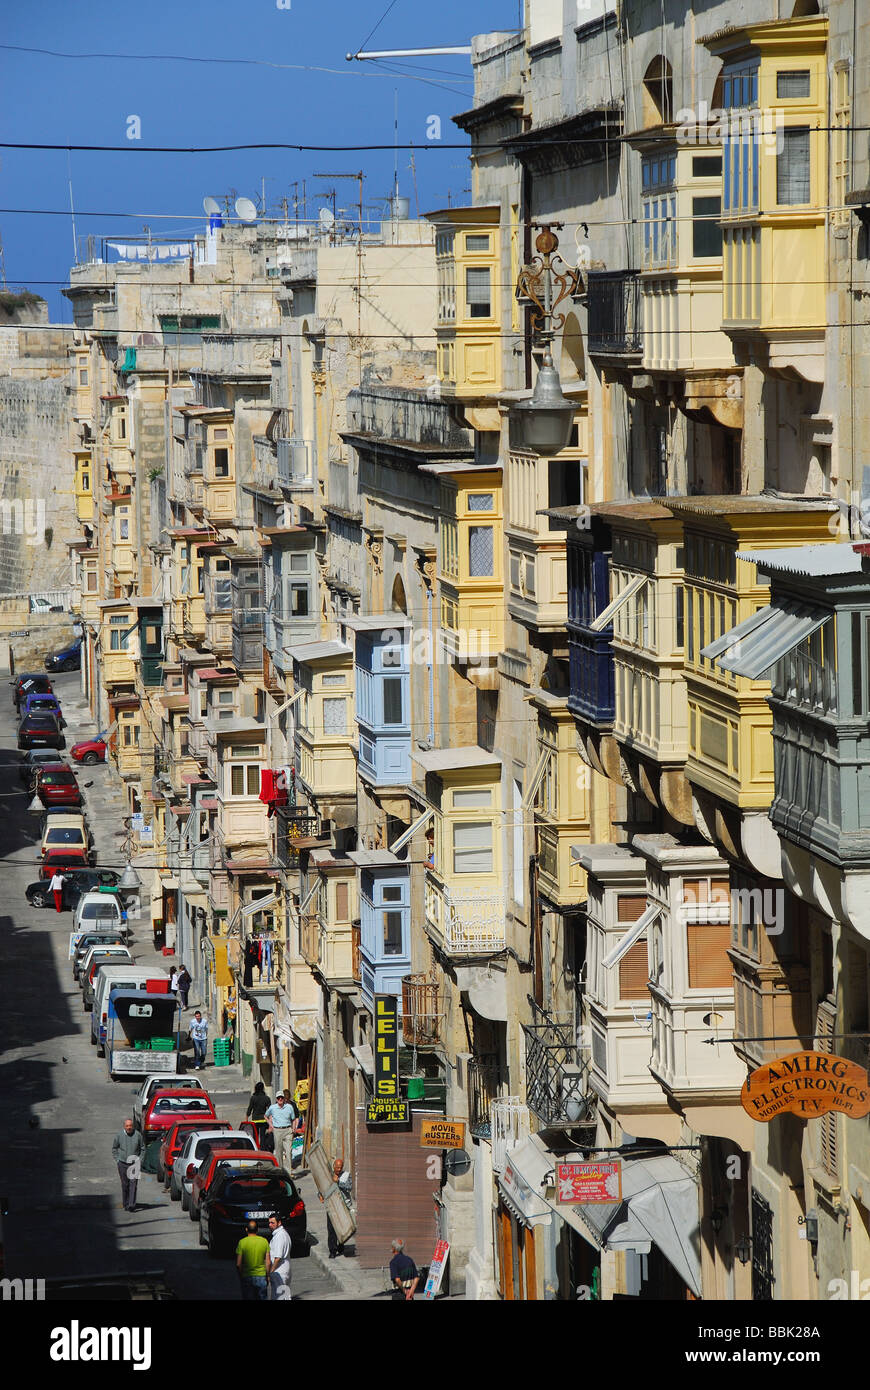 MALTA. Shops and residential buildings on Triq ir-Repubblika (Republic Street) in Valletta. 2009. Stock Photo